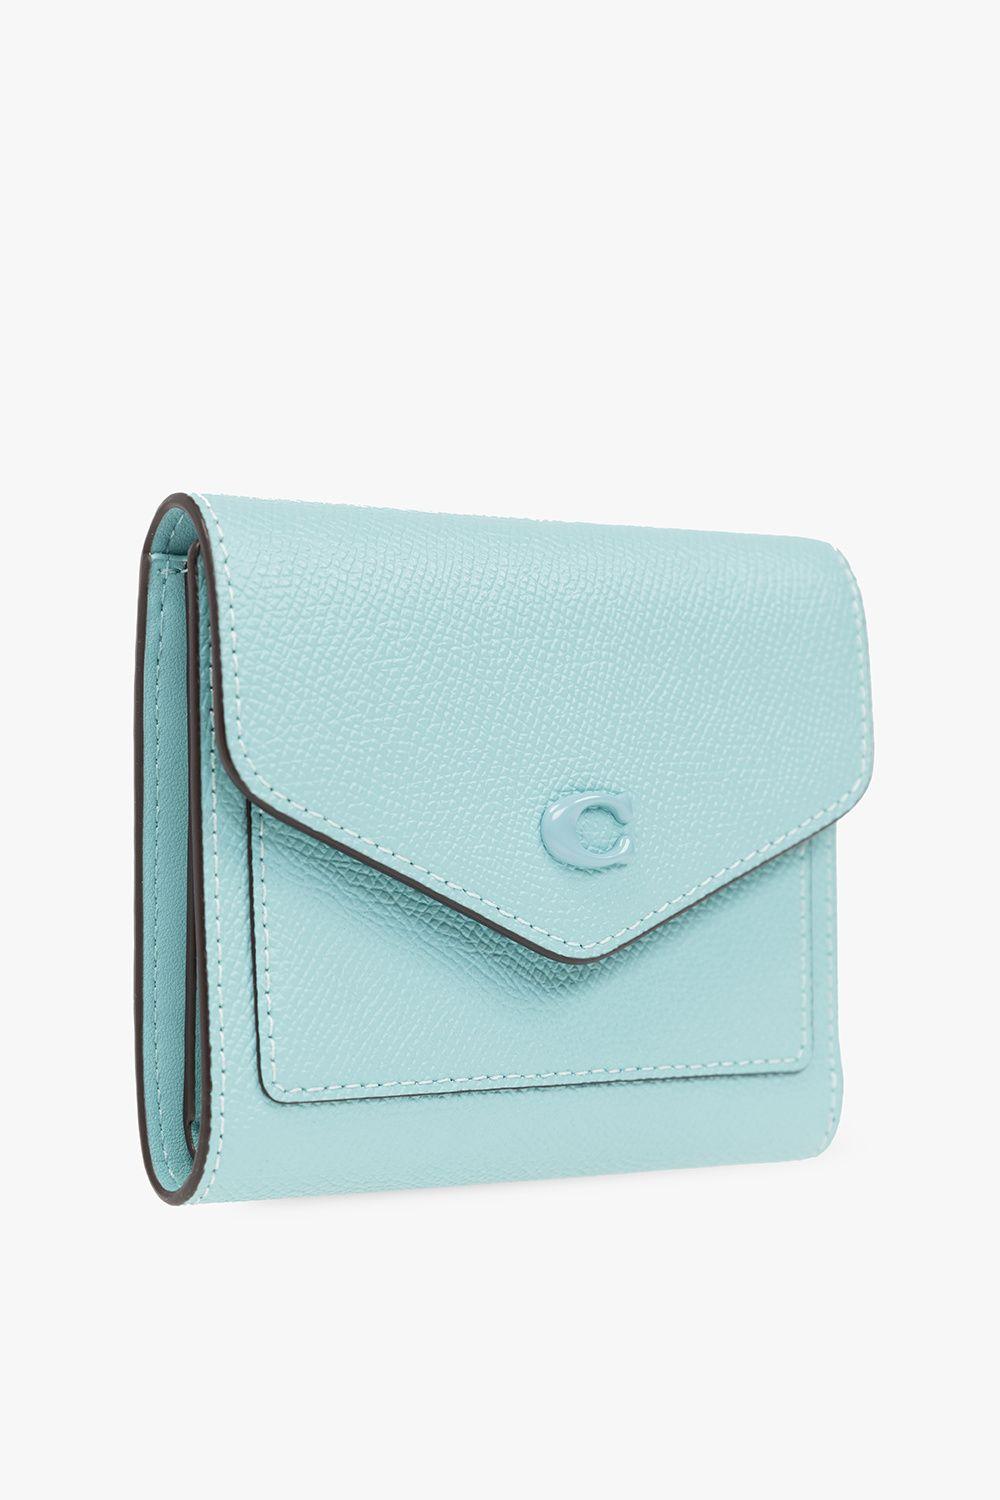 Buy the Coach Leather Women's Wallet Wristlet